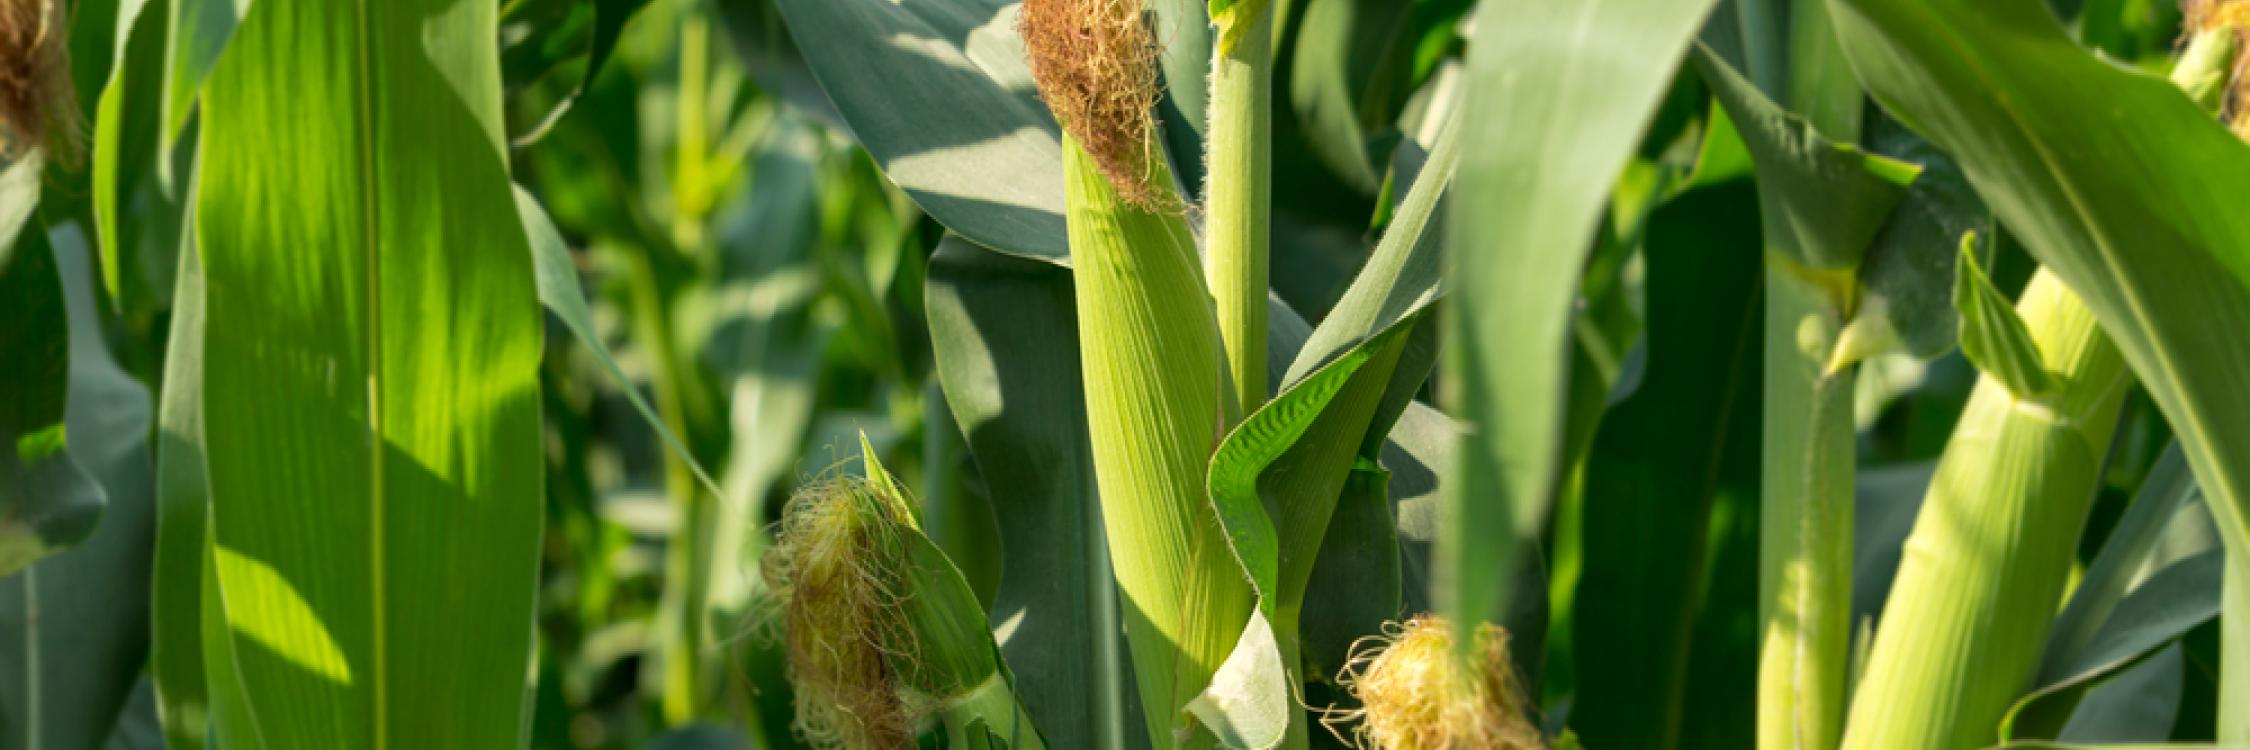 Corn Growing